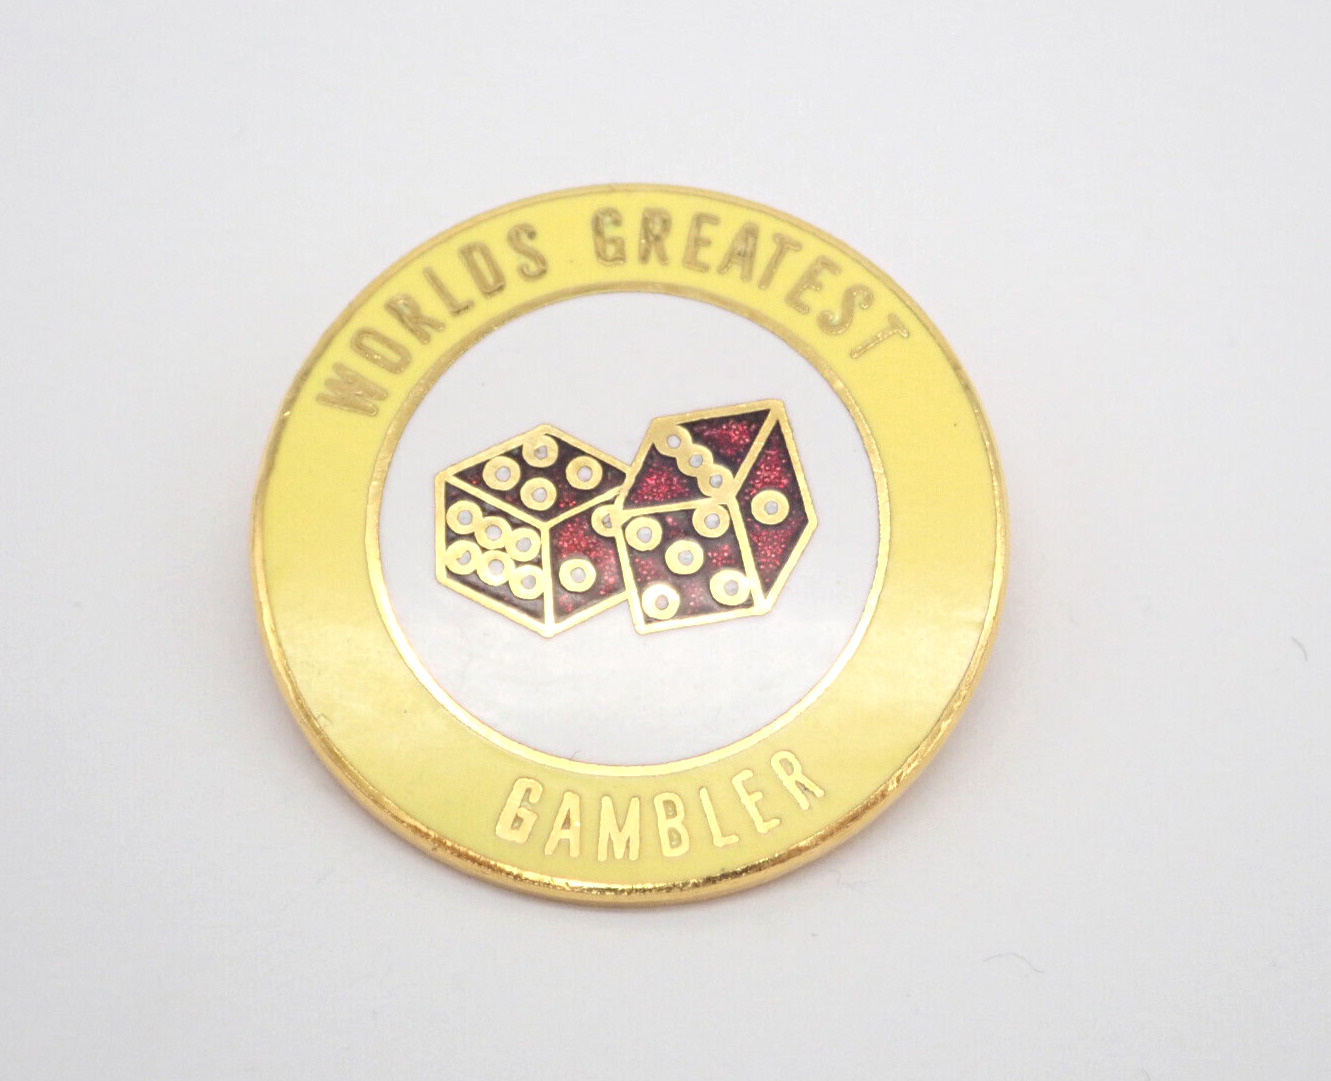 Worlds Greatest Gambler Gold Tone Vintage Lapel Pin